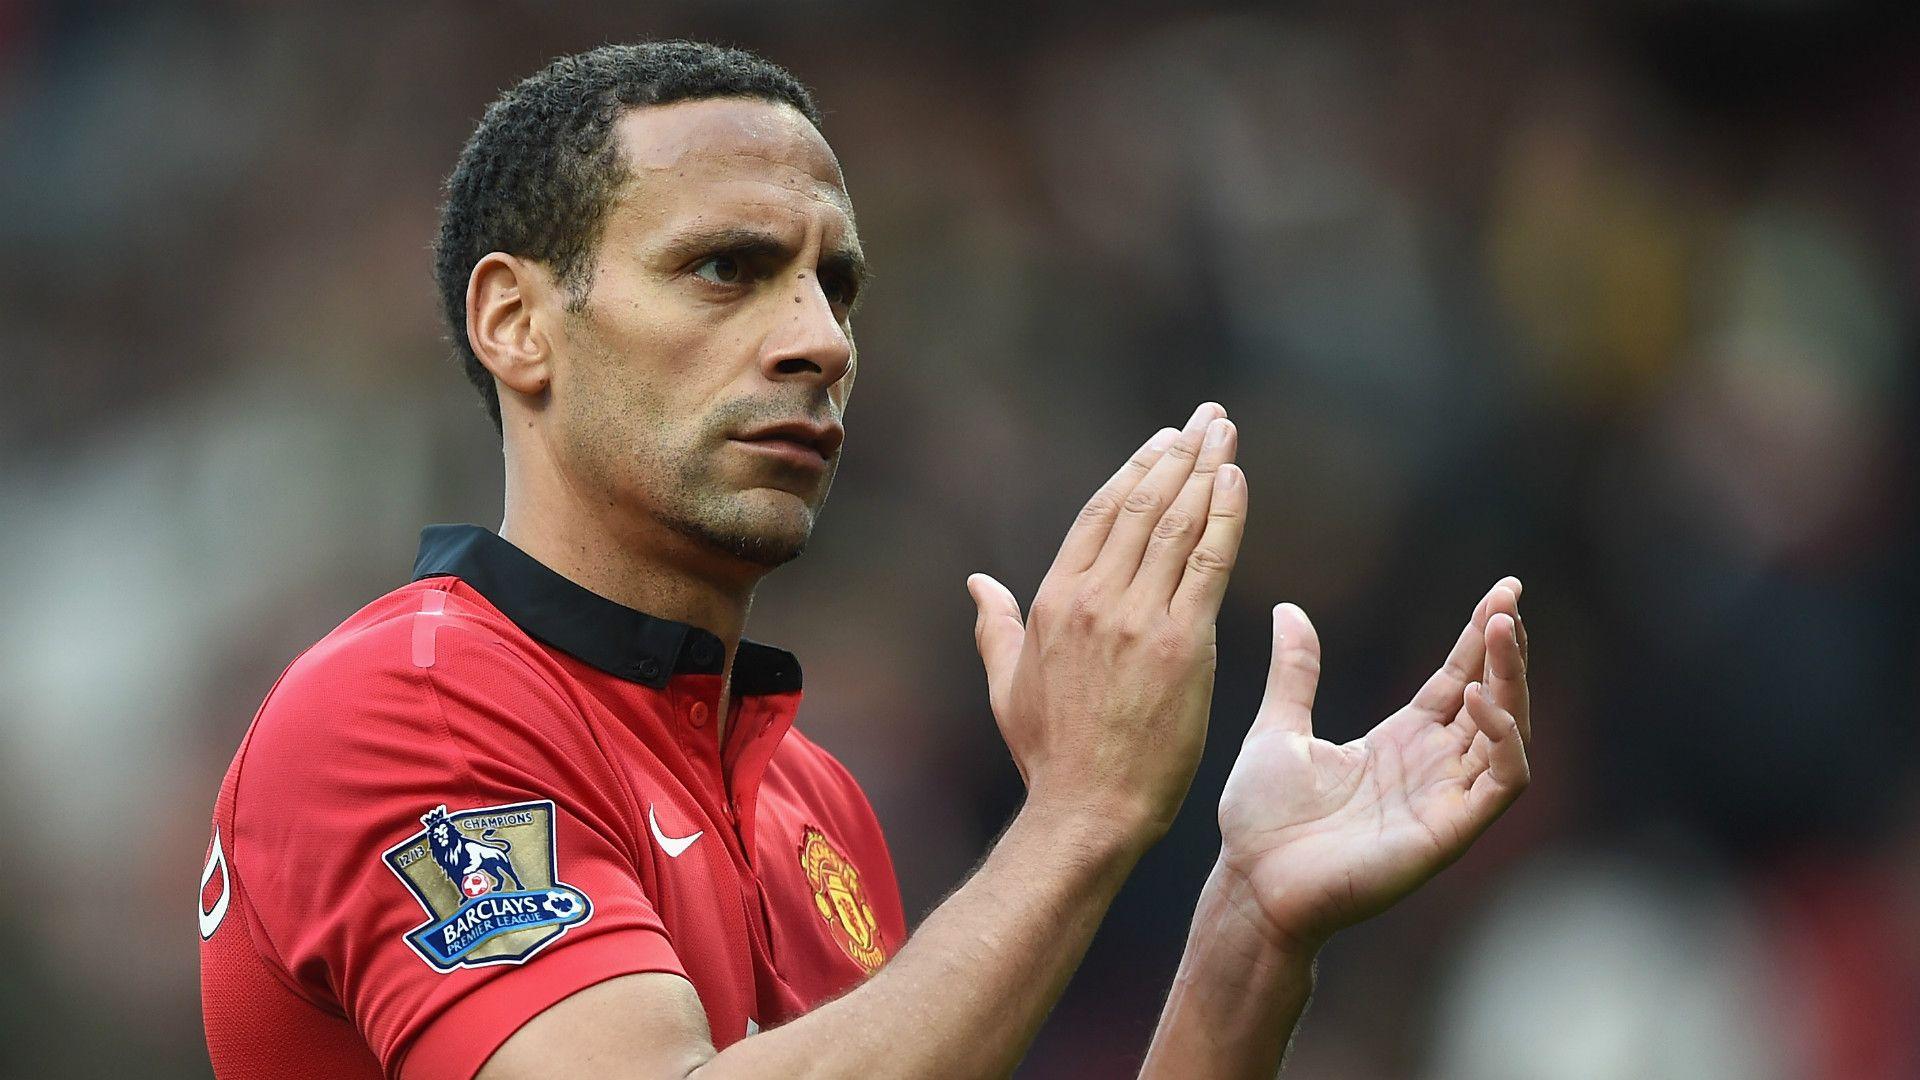 Mustafi reveals Manchester United icon Rio Ferdinand is his